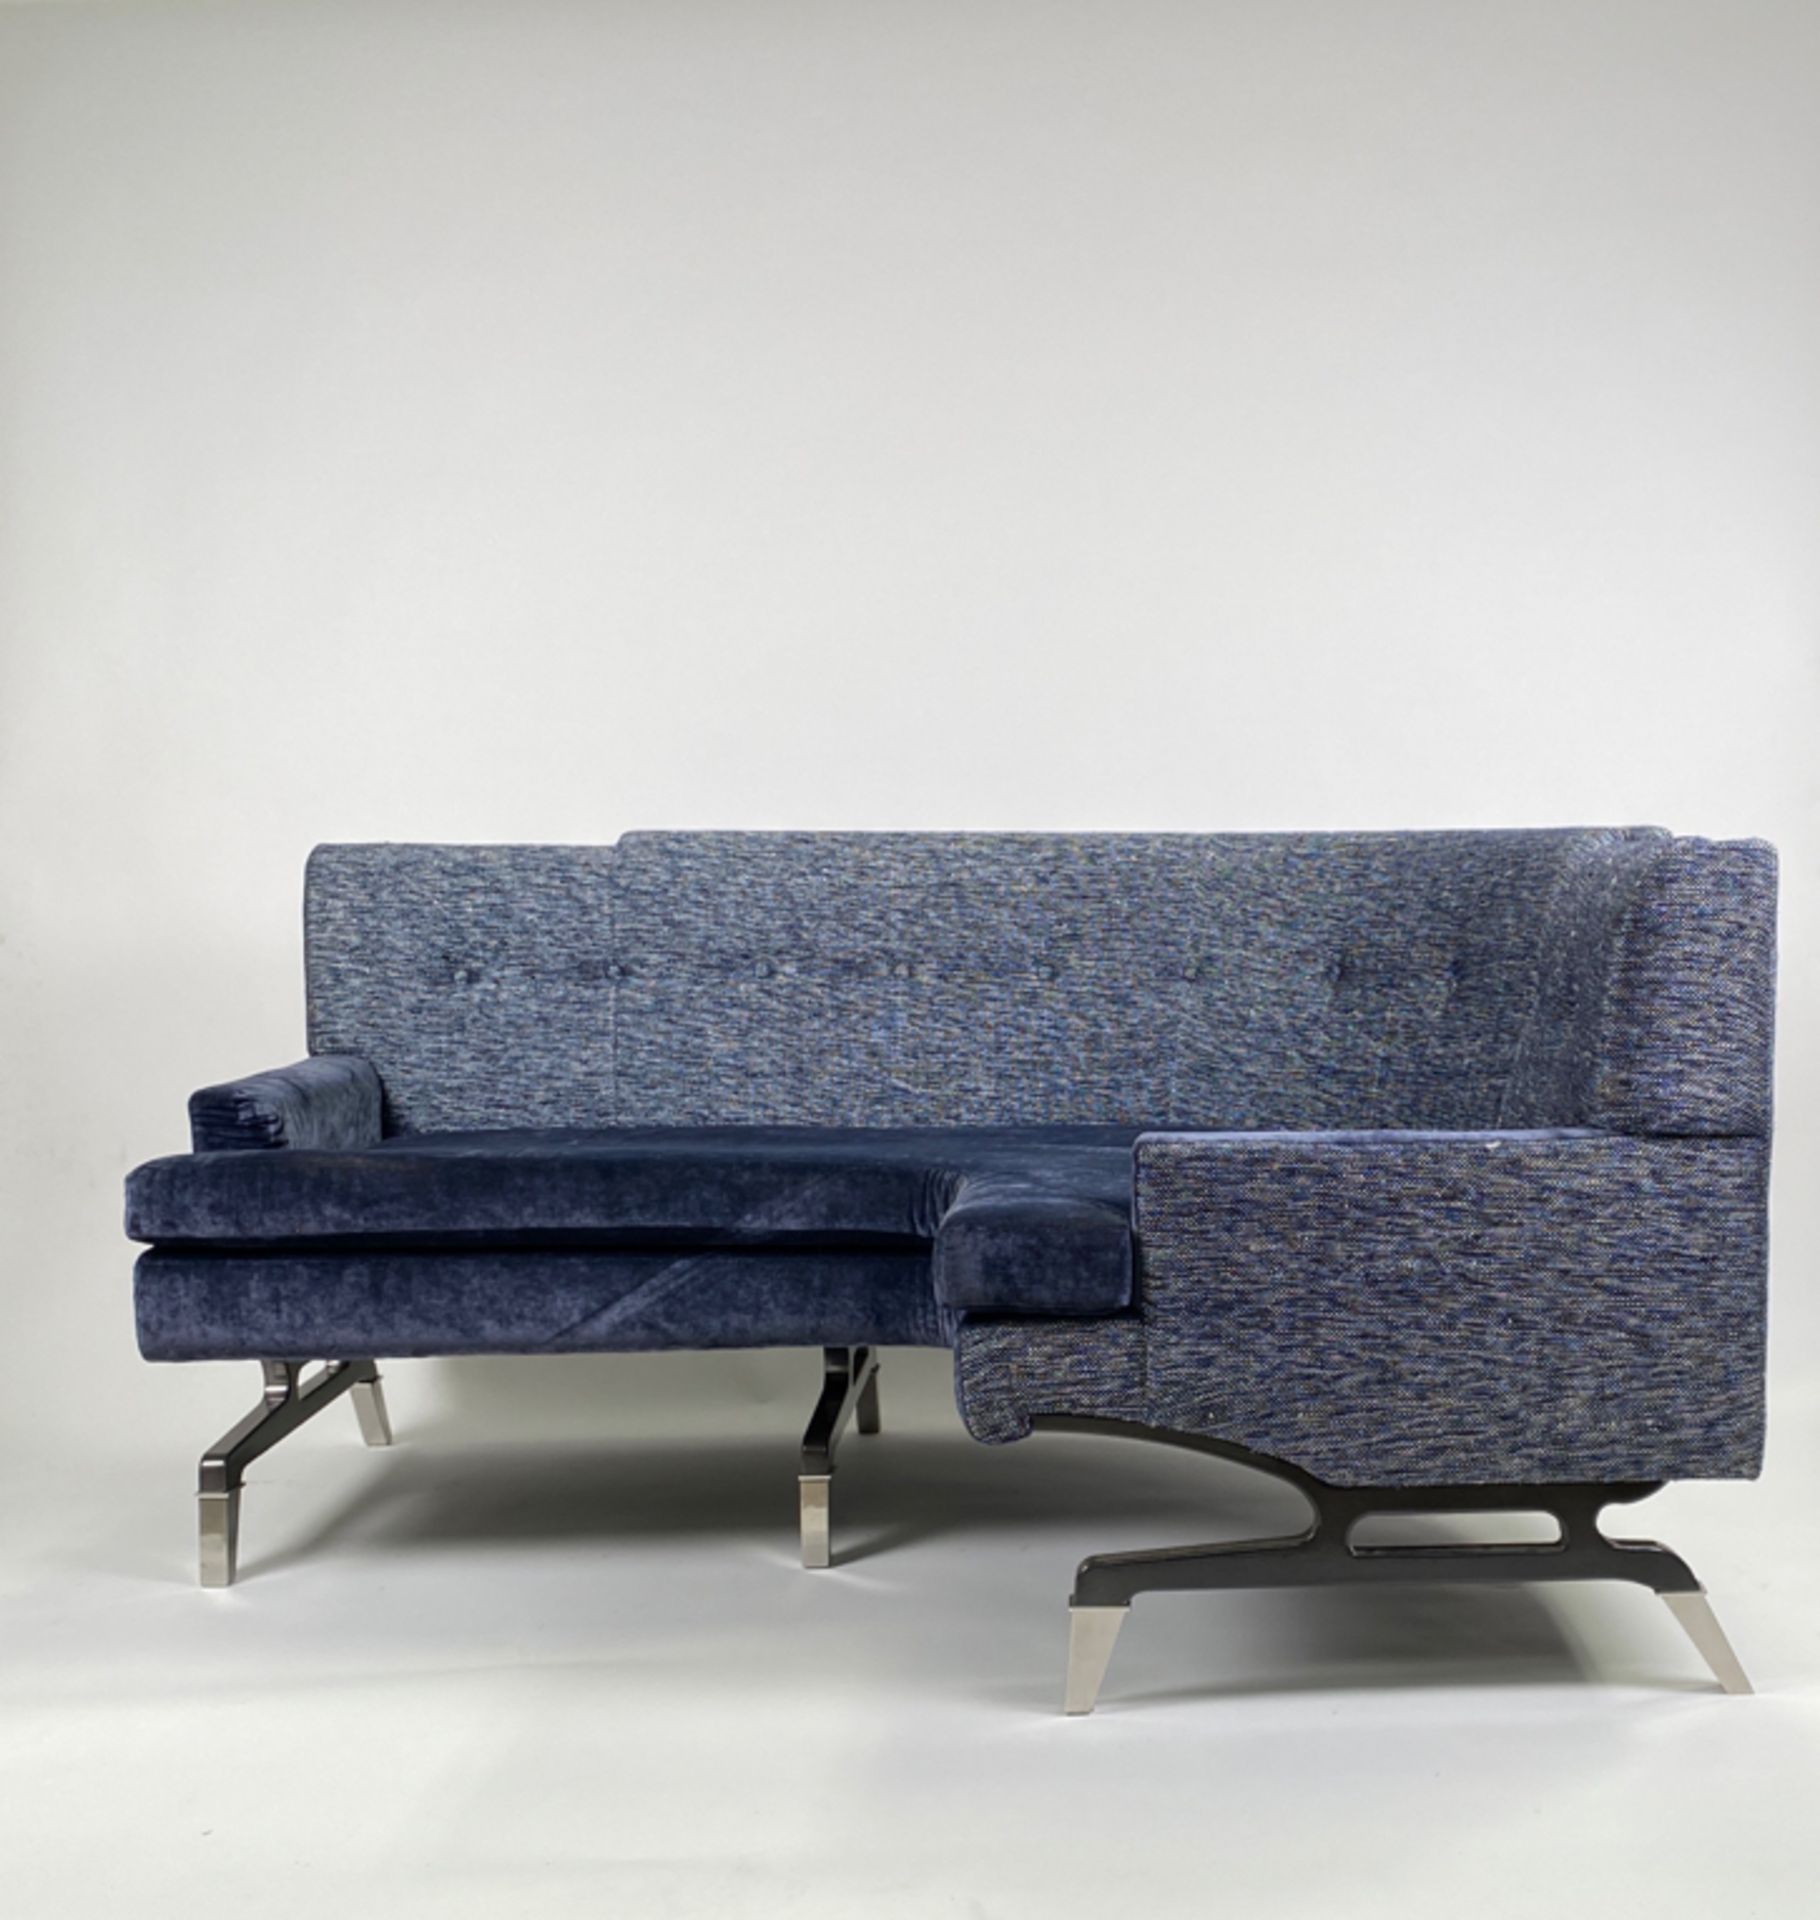 Bespoke Ben Whistler Sofa Made for The Berkeley Blue Bar - Image 2 of 11